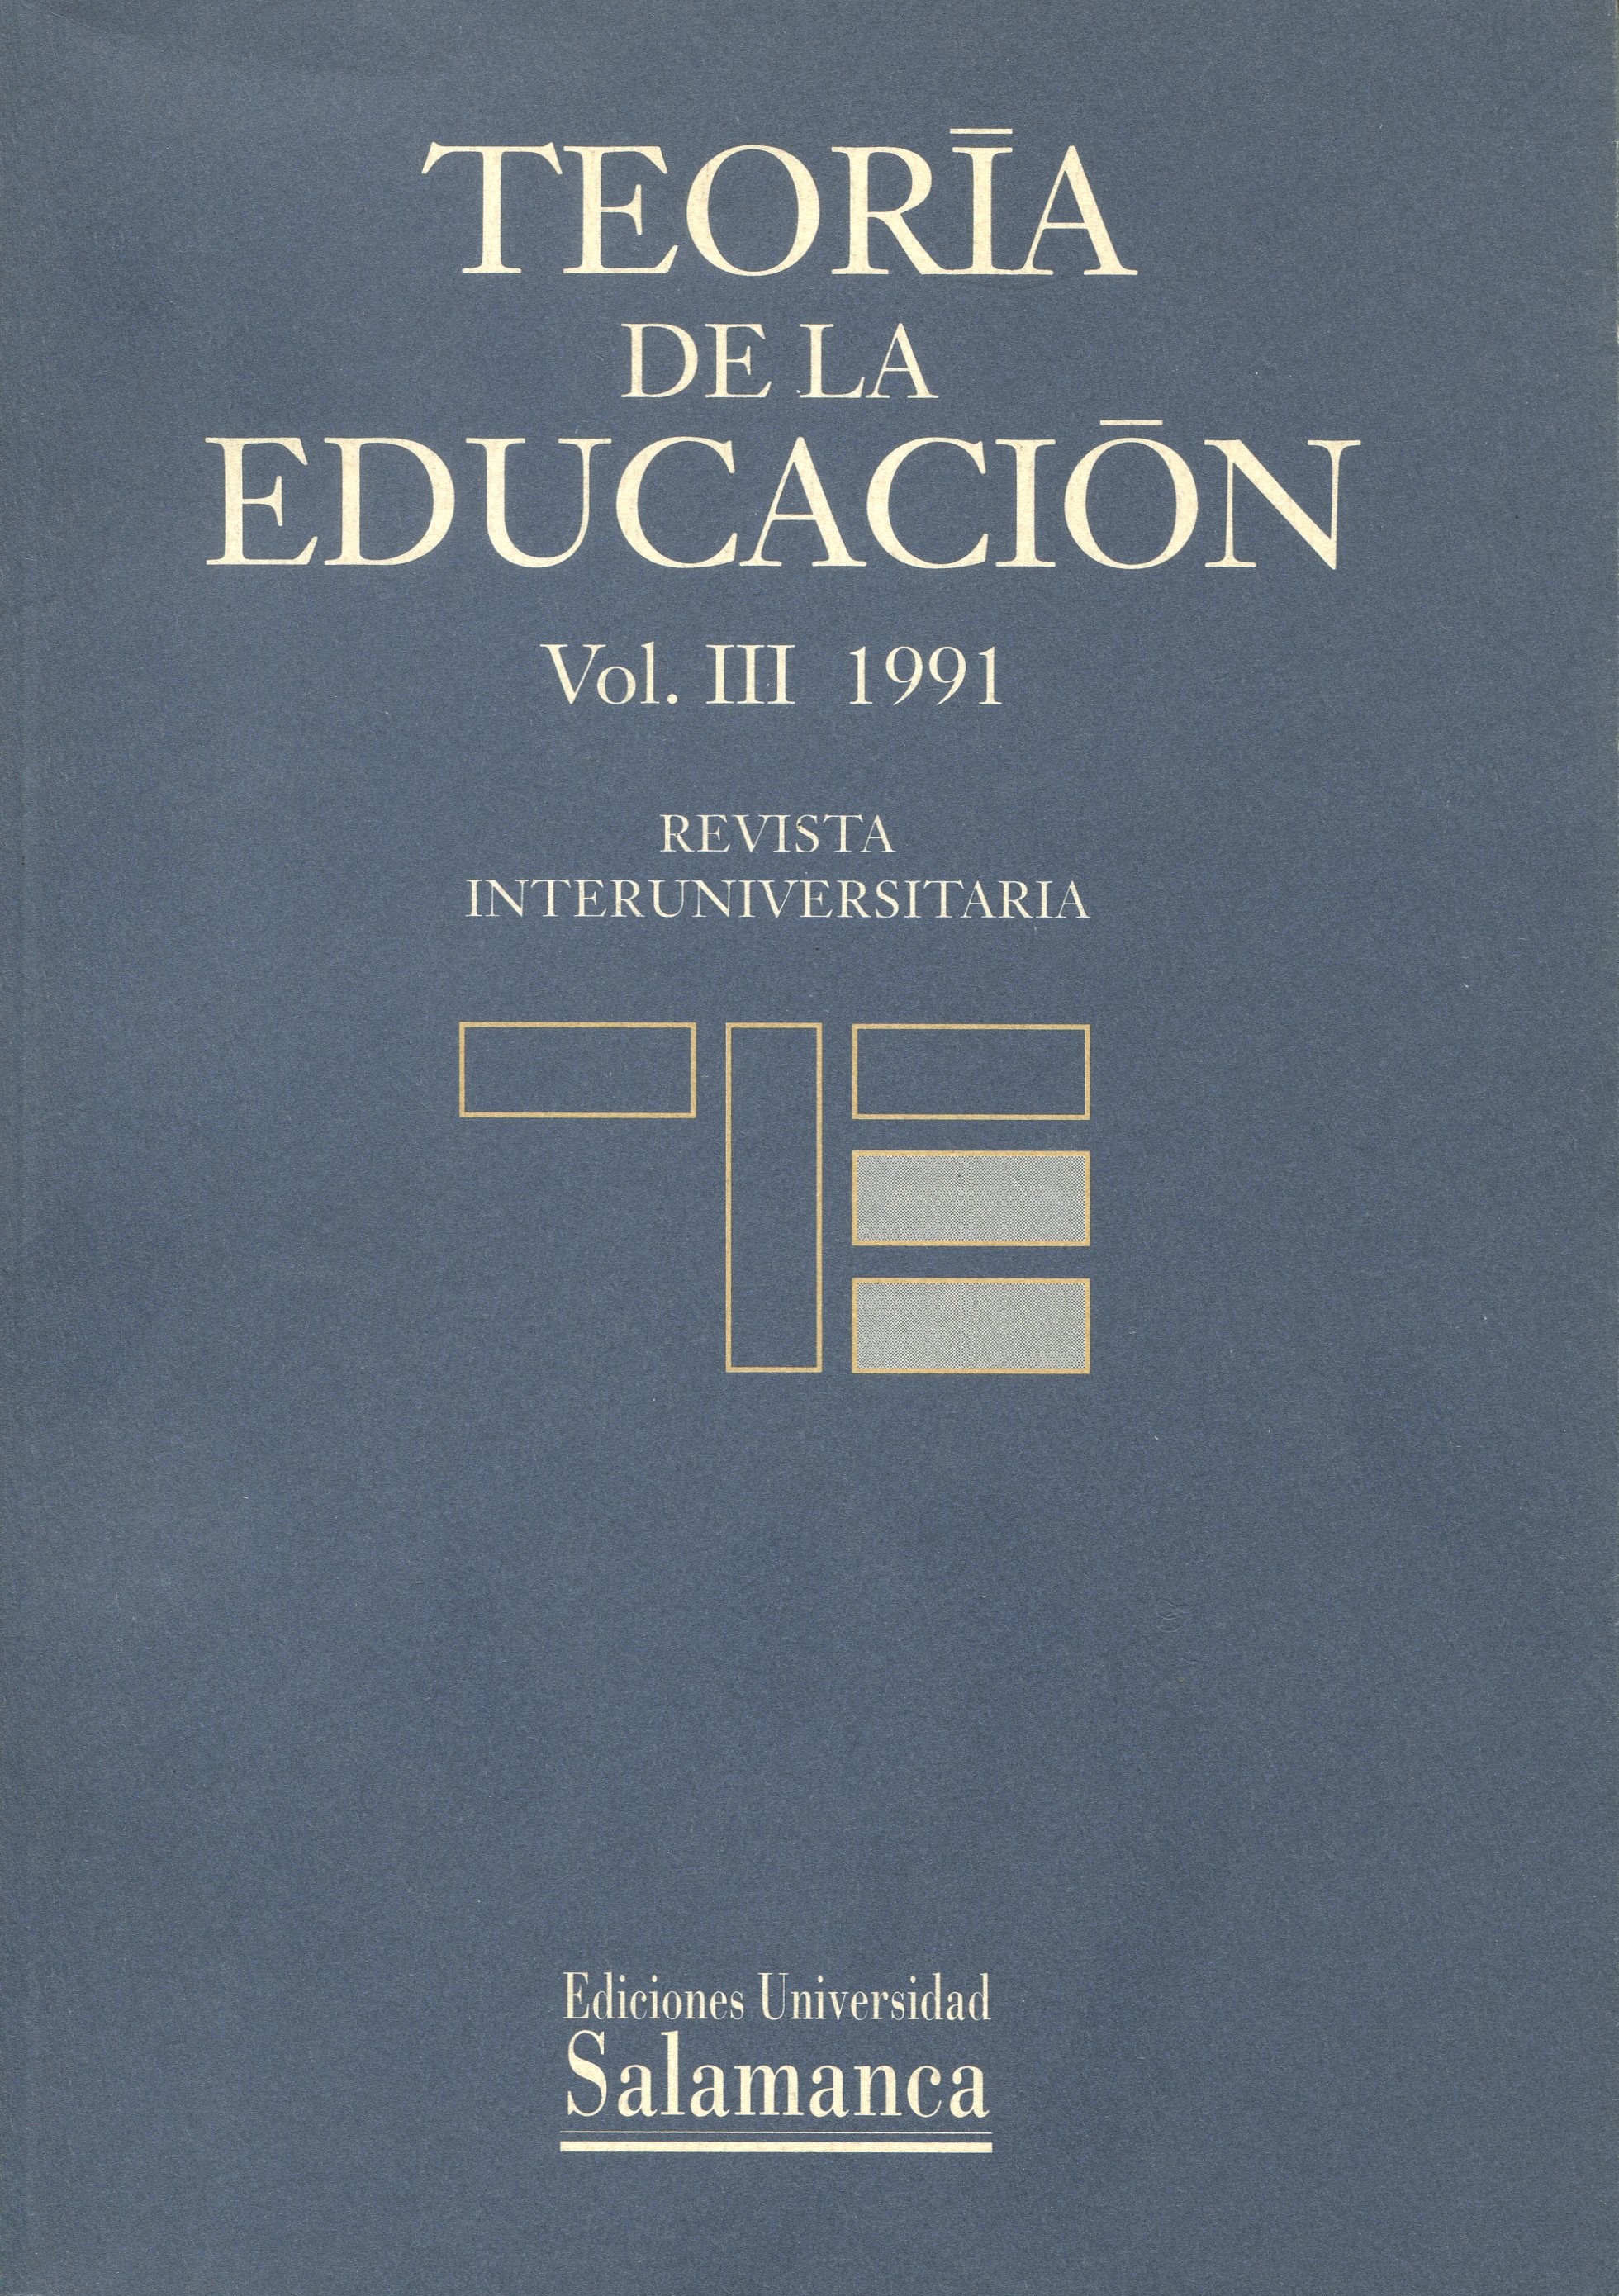                         Ver Vol. 3 (1991)
                    